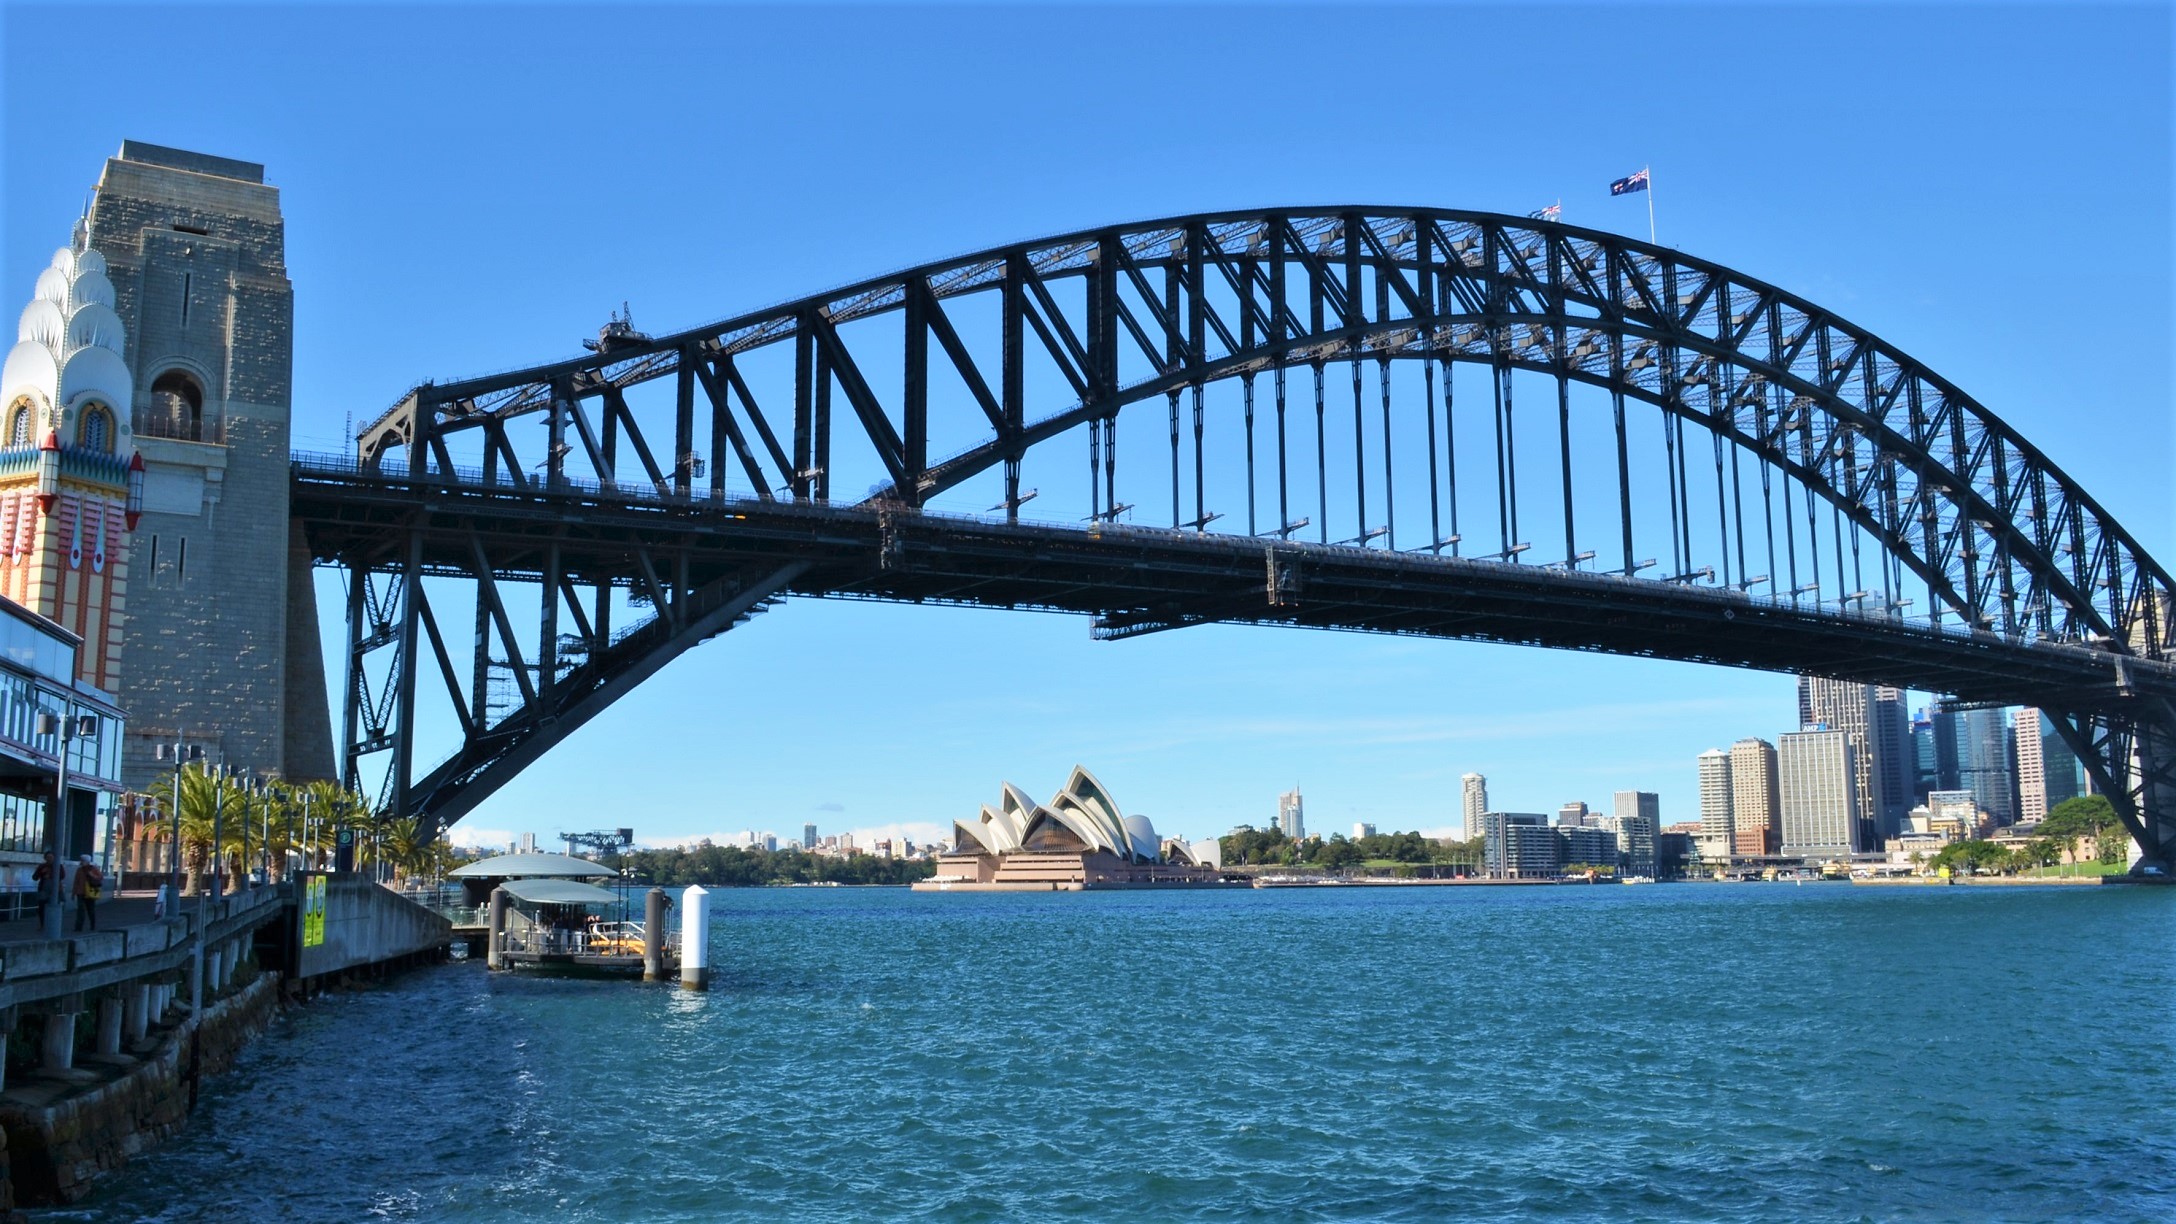 Sydney Harbour Bridge, Sydney, Australia by lonewolf6738